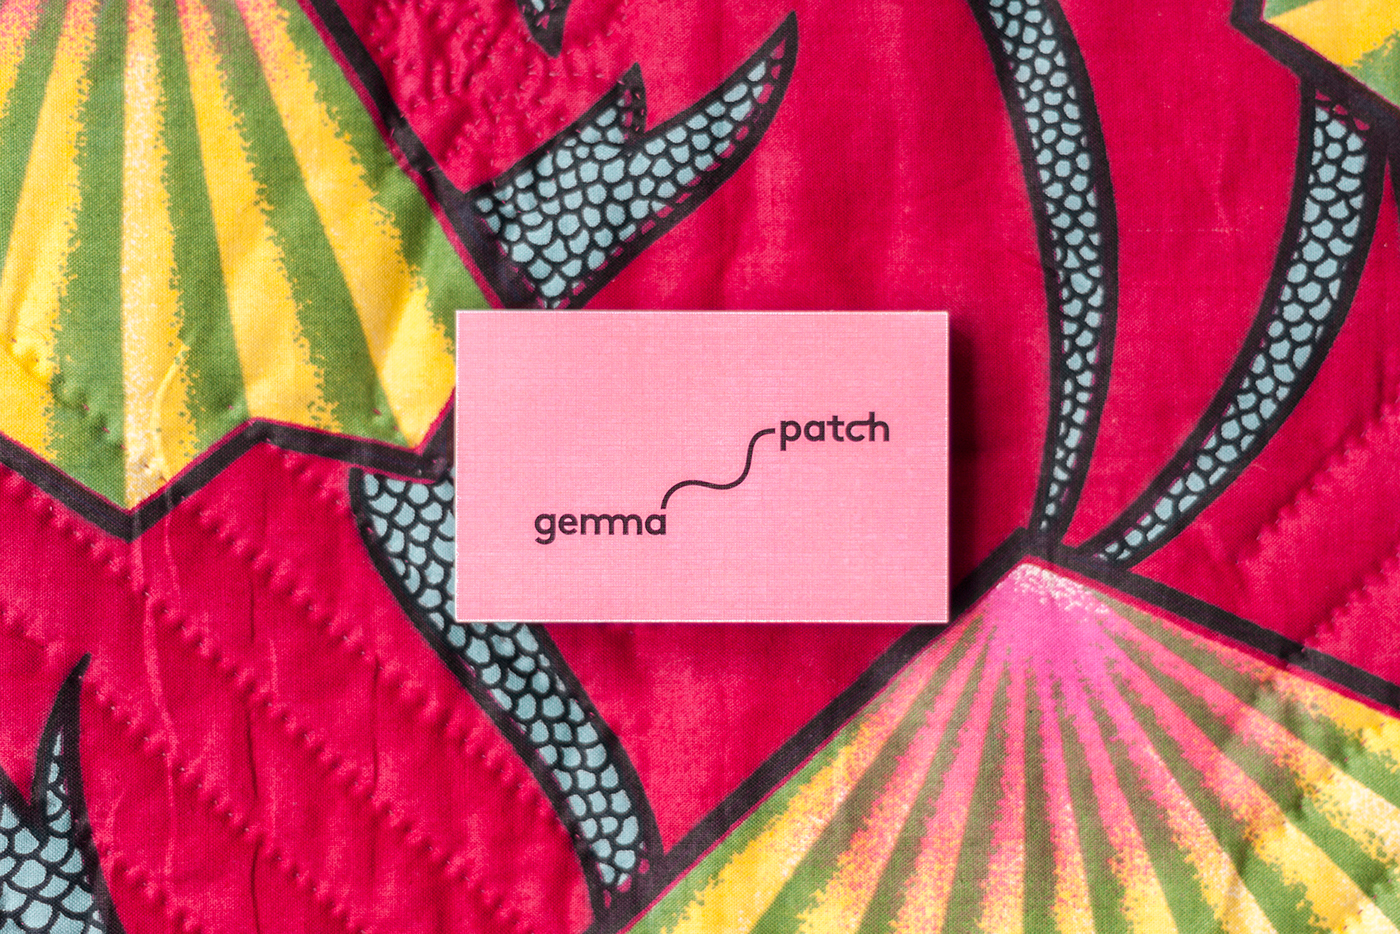 patchwork gemmapatch valls gemma marcos